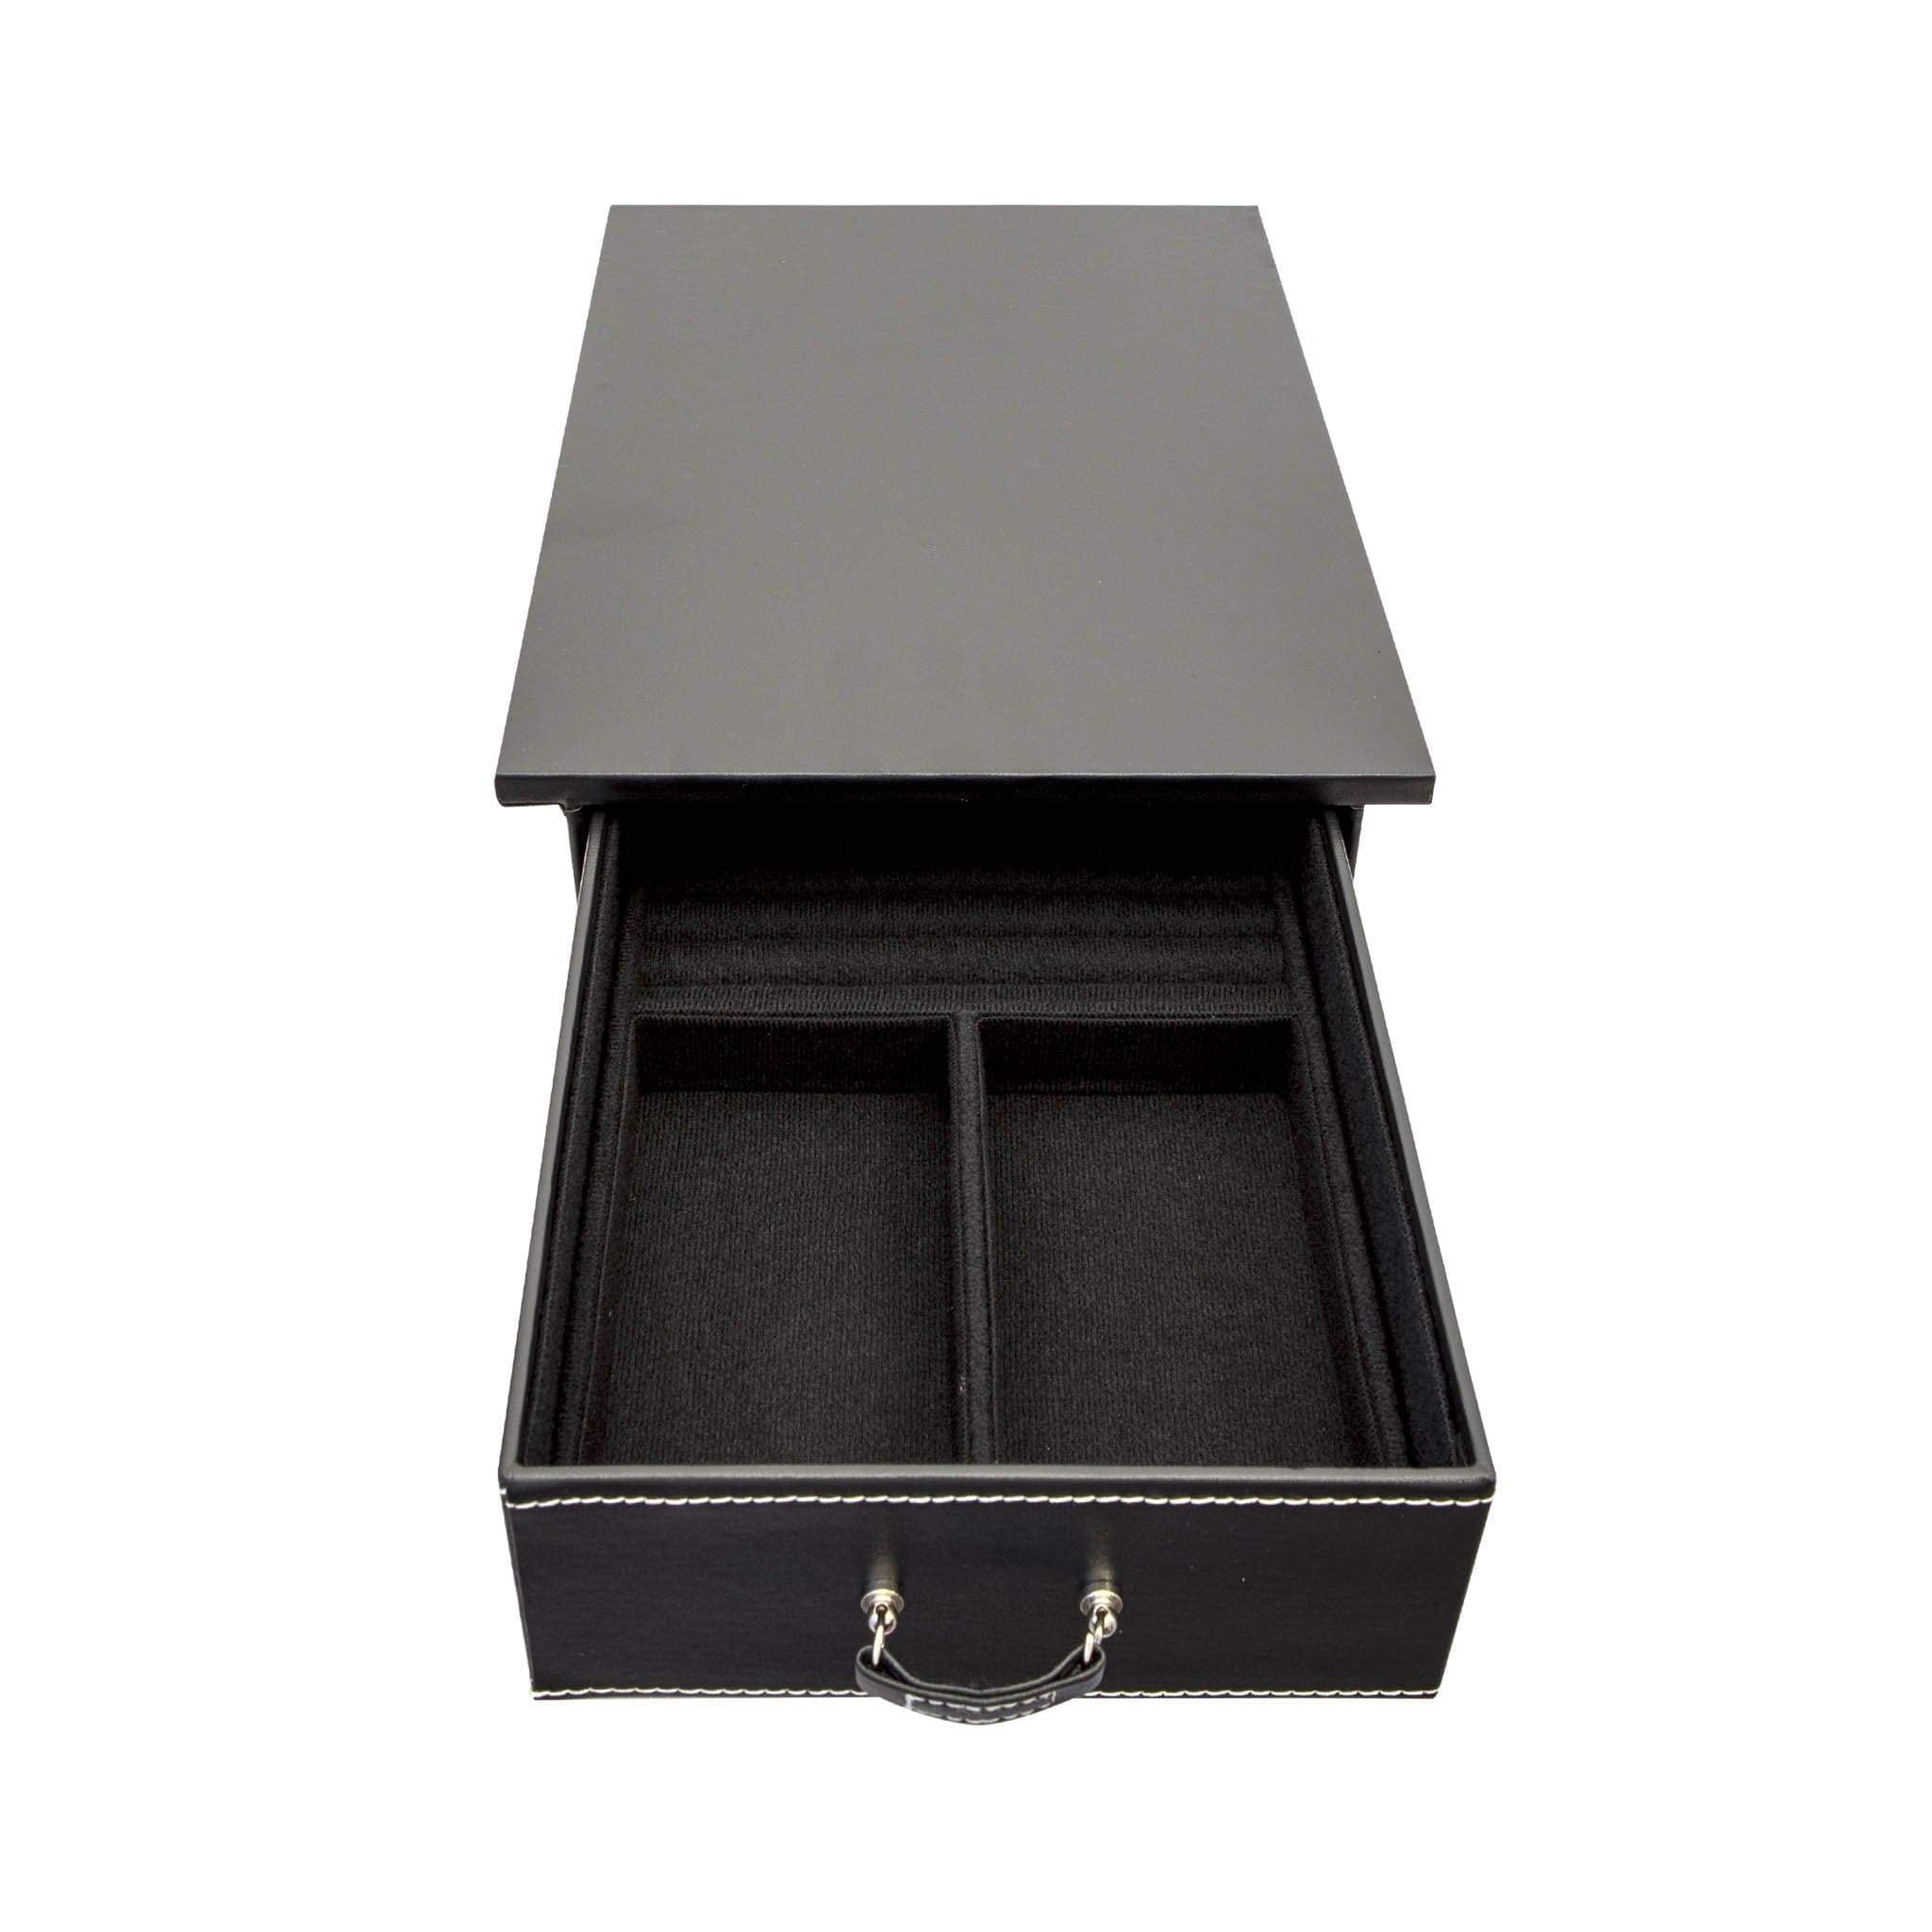 Accessory - Storage - Jewelry Drawer - 6.5 inch - under shelf mount - 20 size safes, photo 1